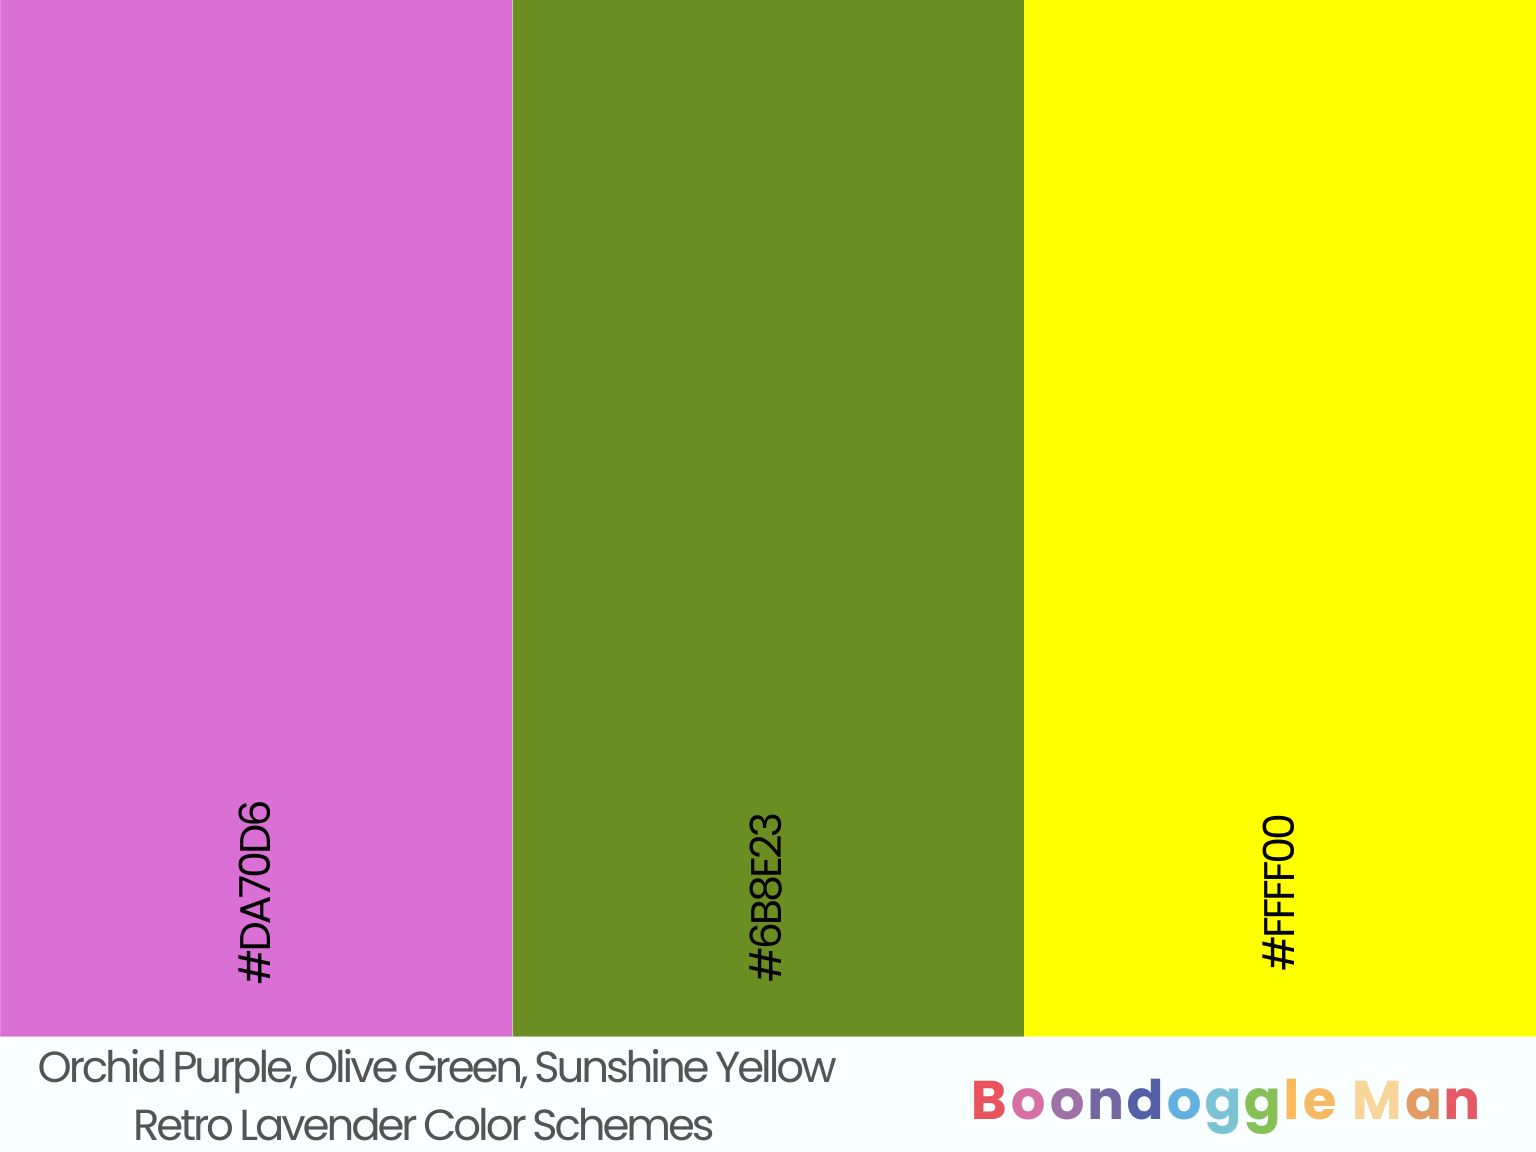 Orchid Purple, Olive Green, Sunshine Yellow